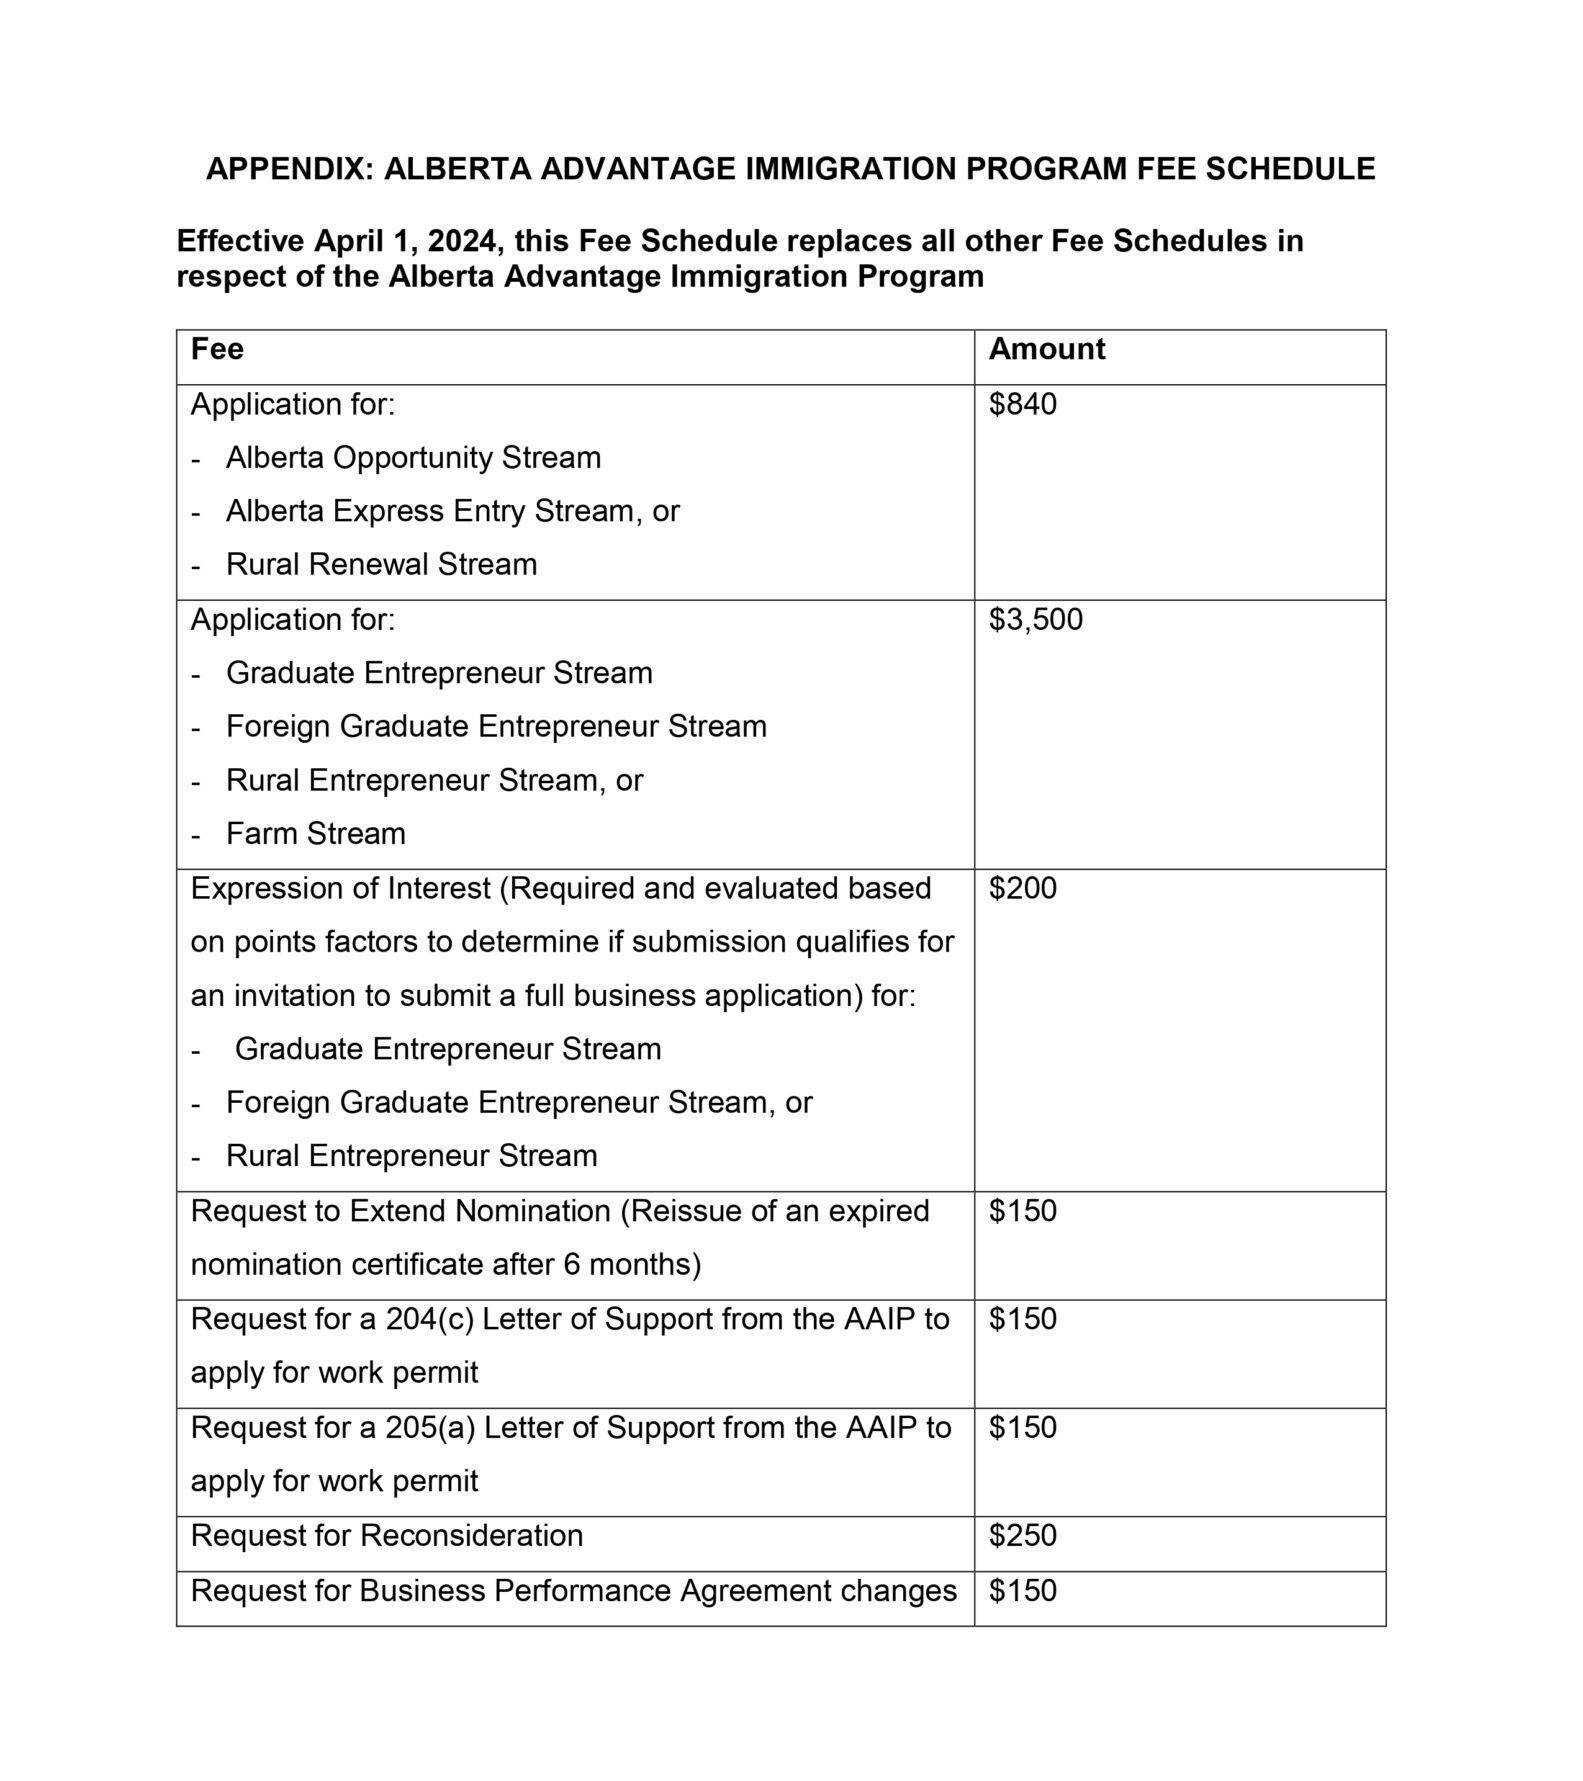 Alberta Advantage Immigration Program fees